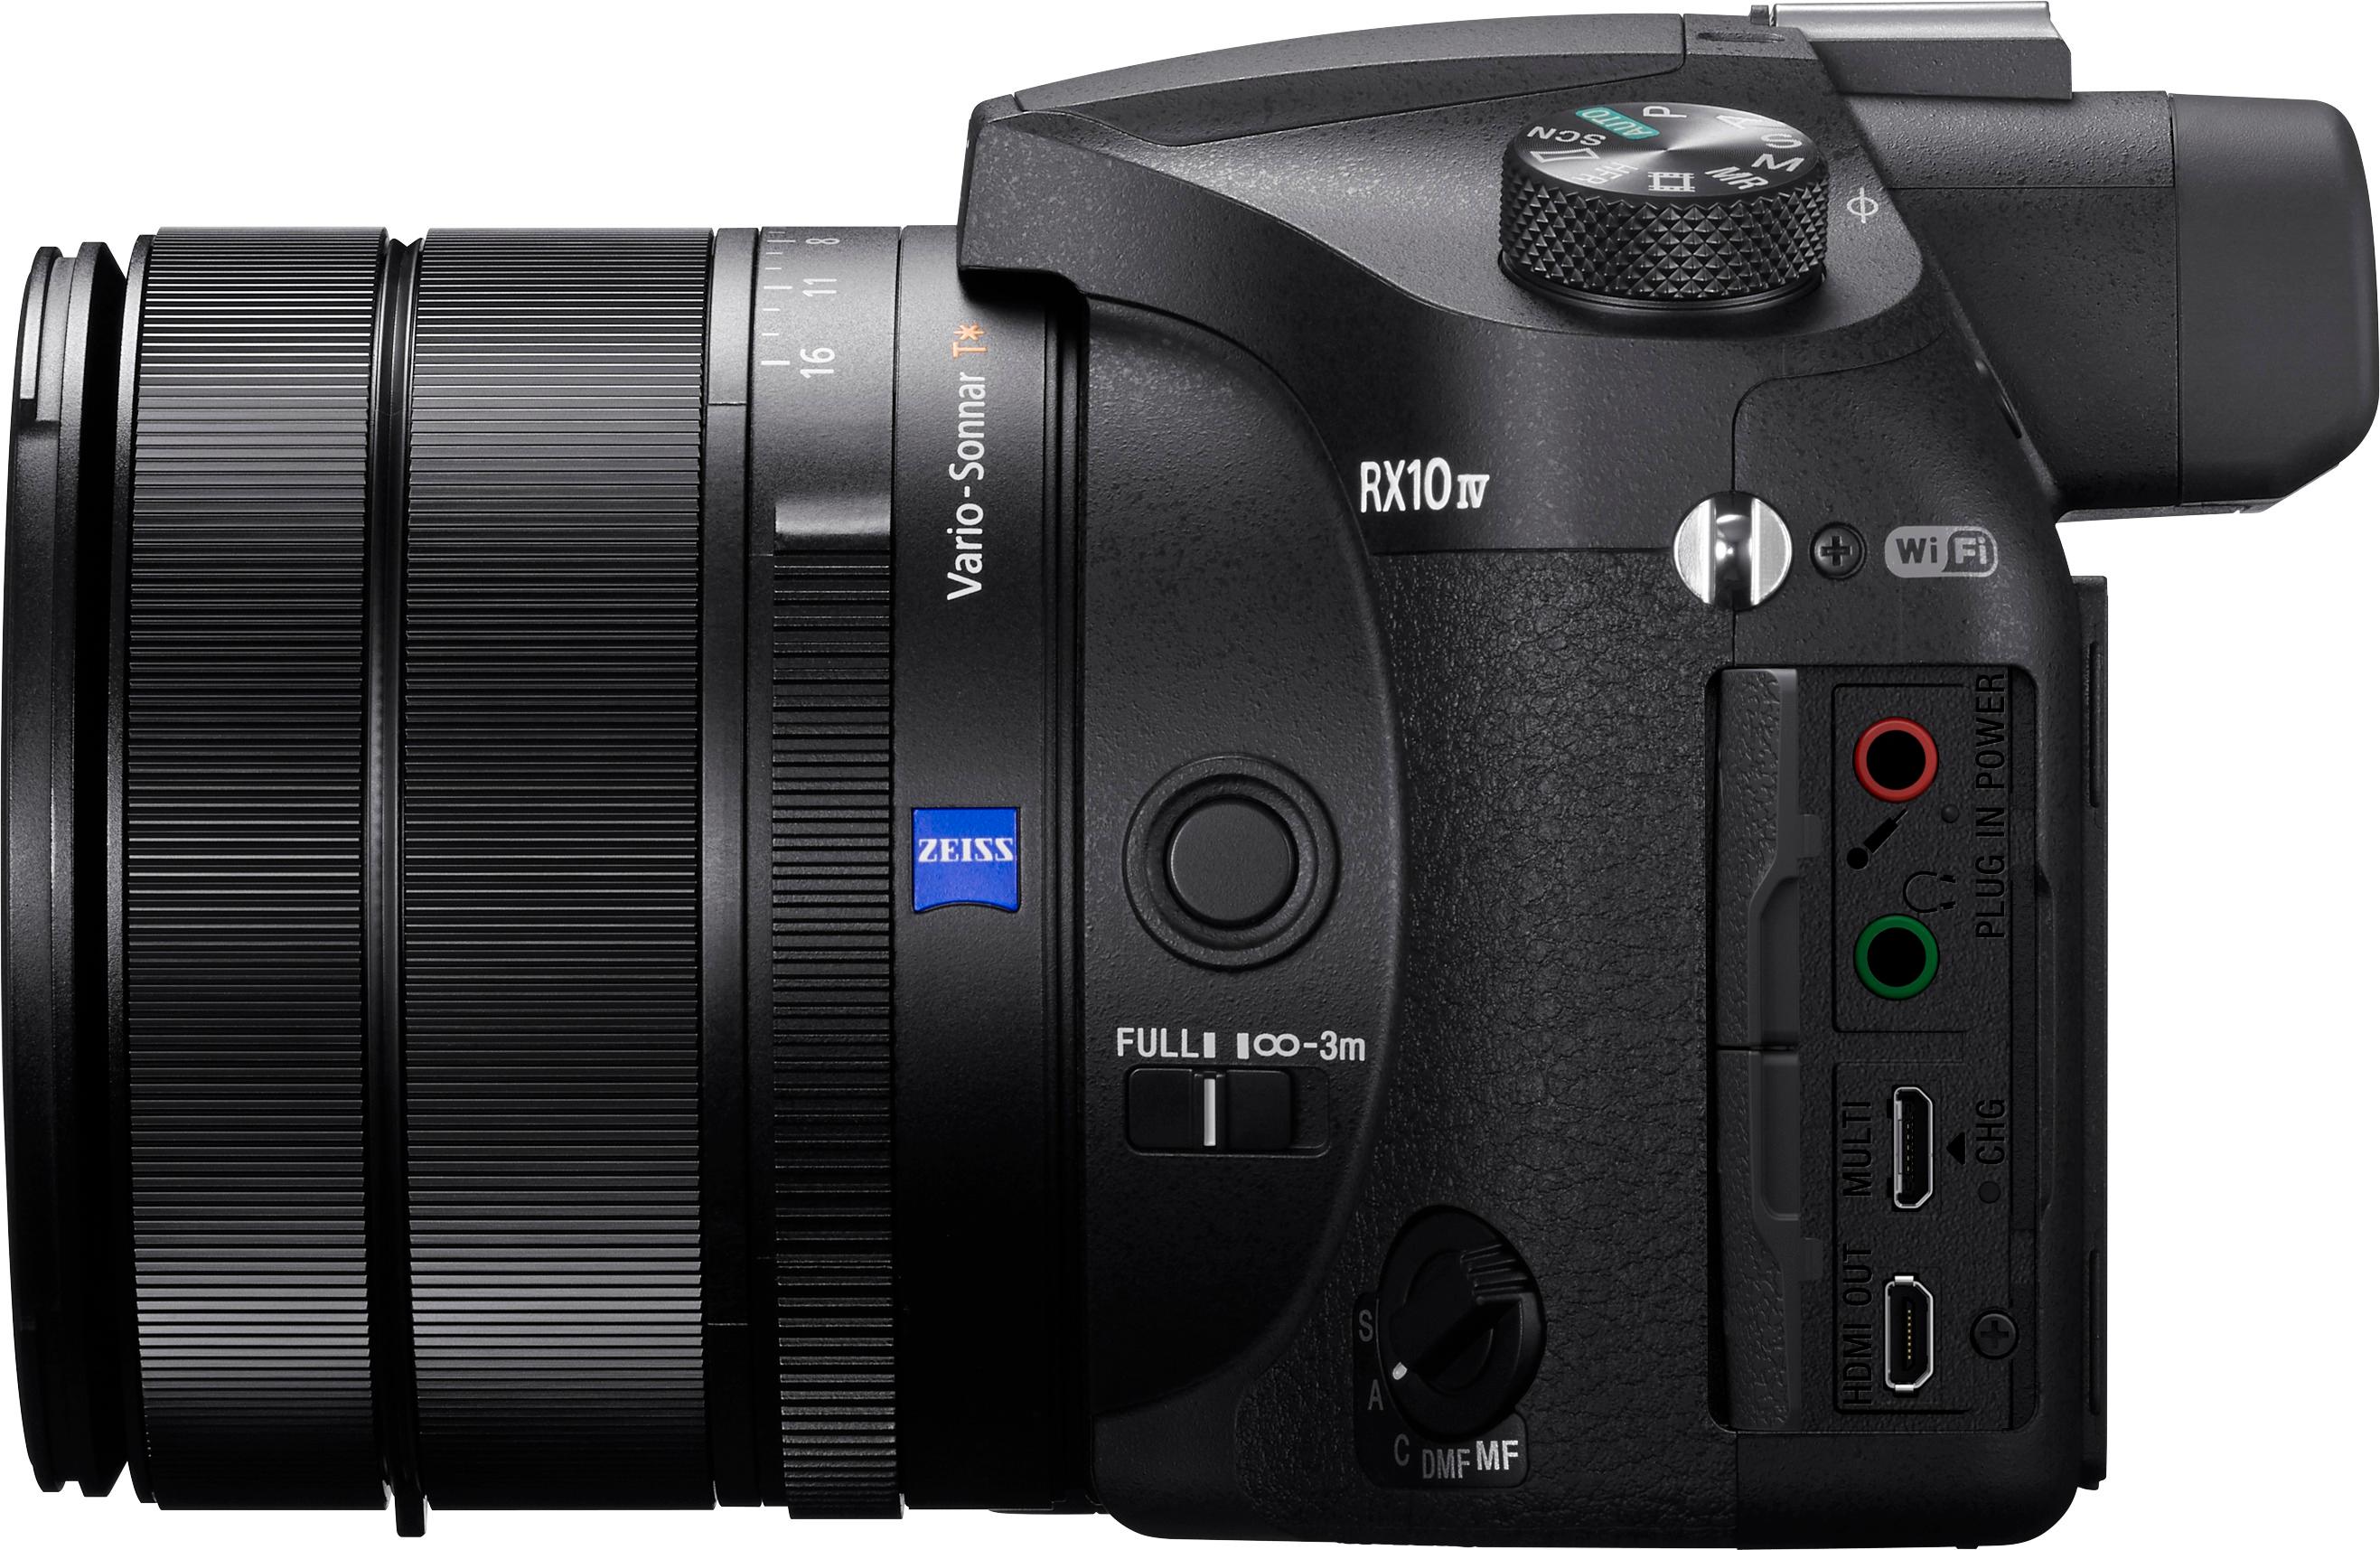 Sony Cyber-shot RX10 IV 20.1-Megapixel Digital Camera Black